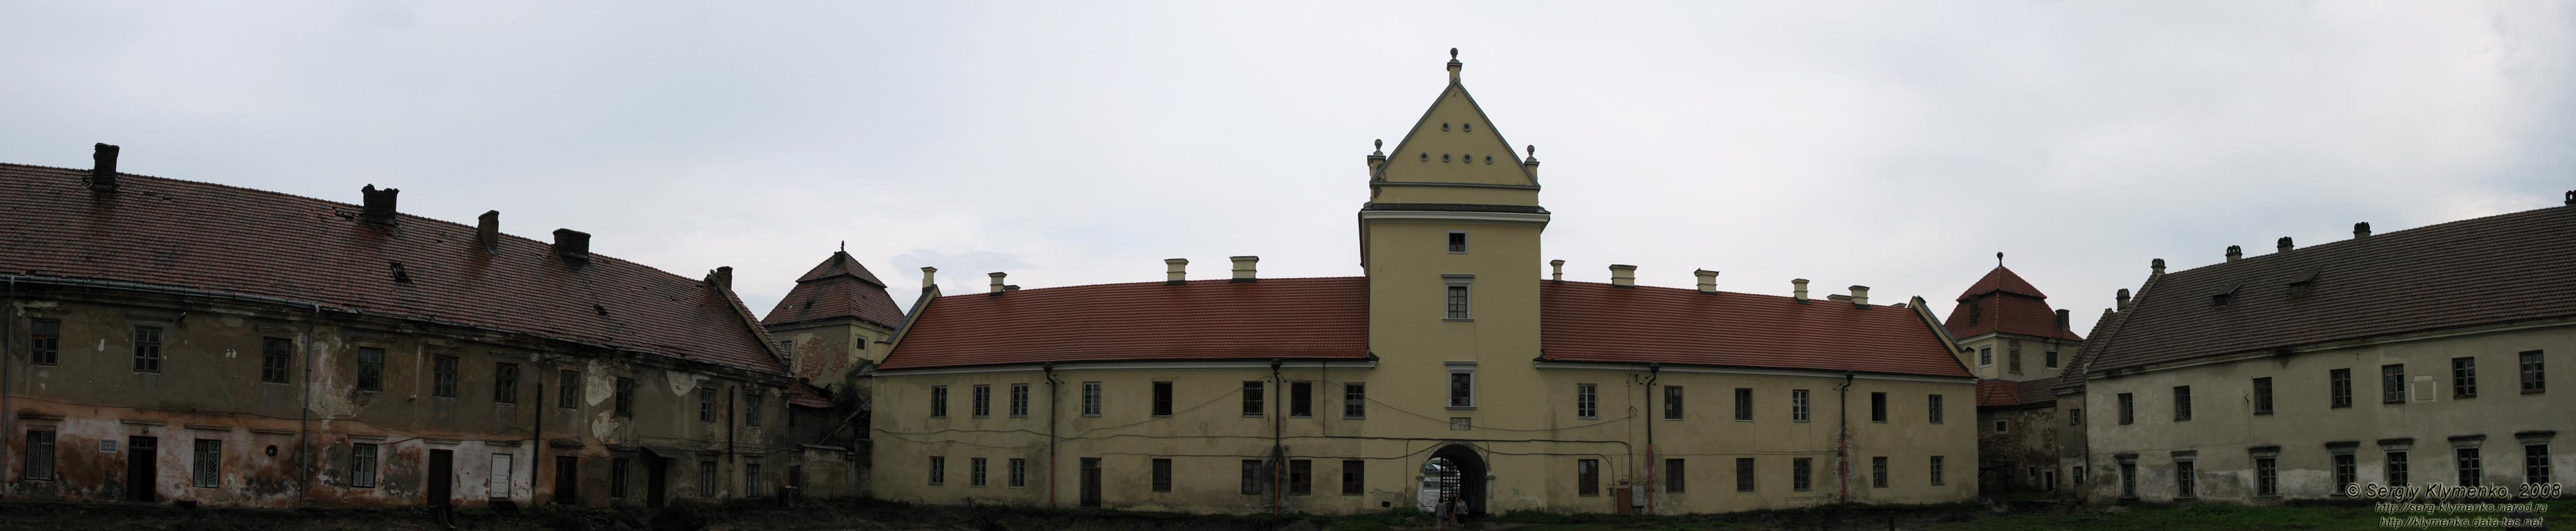 Жолква. Фото. Замок (1594 год), внутренний двор. Панорама (~180°).